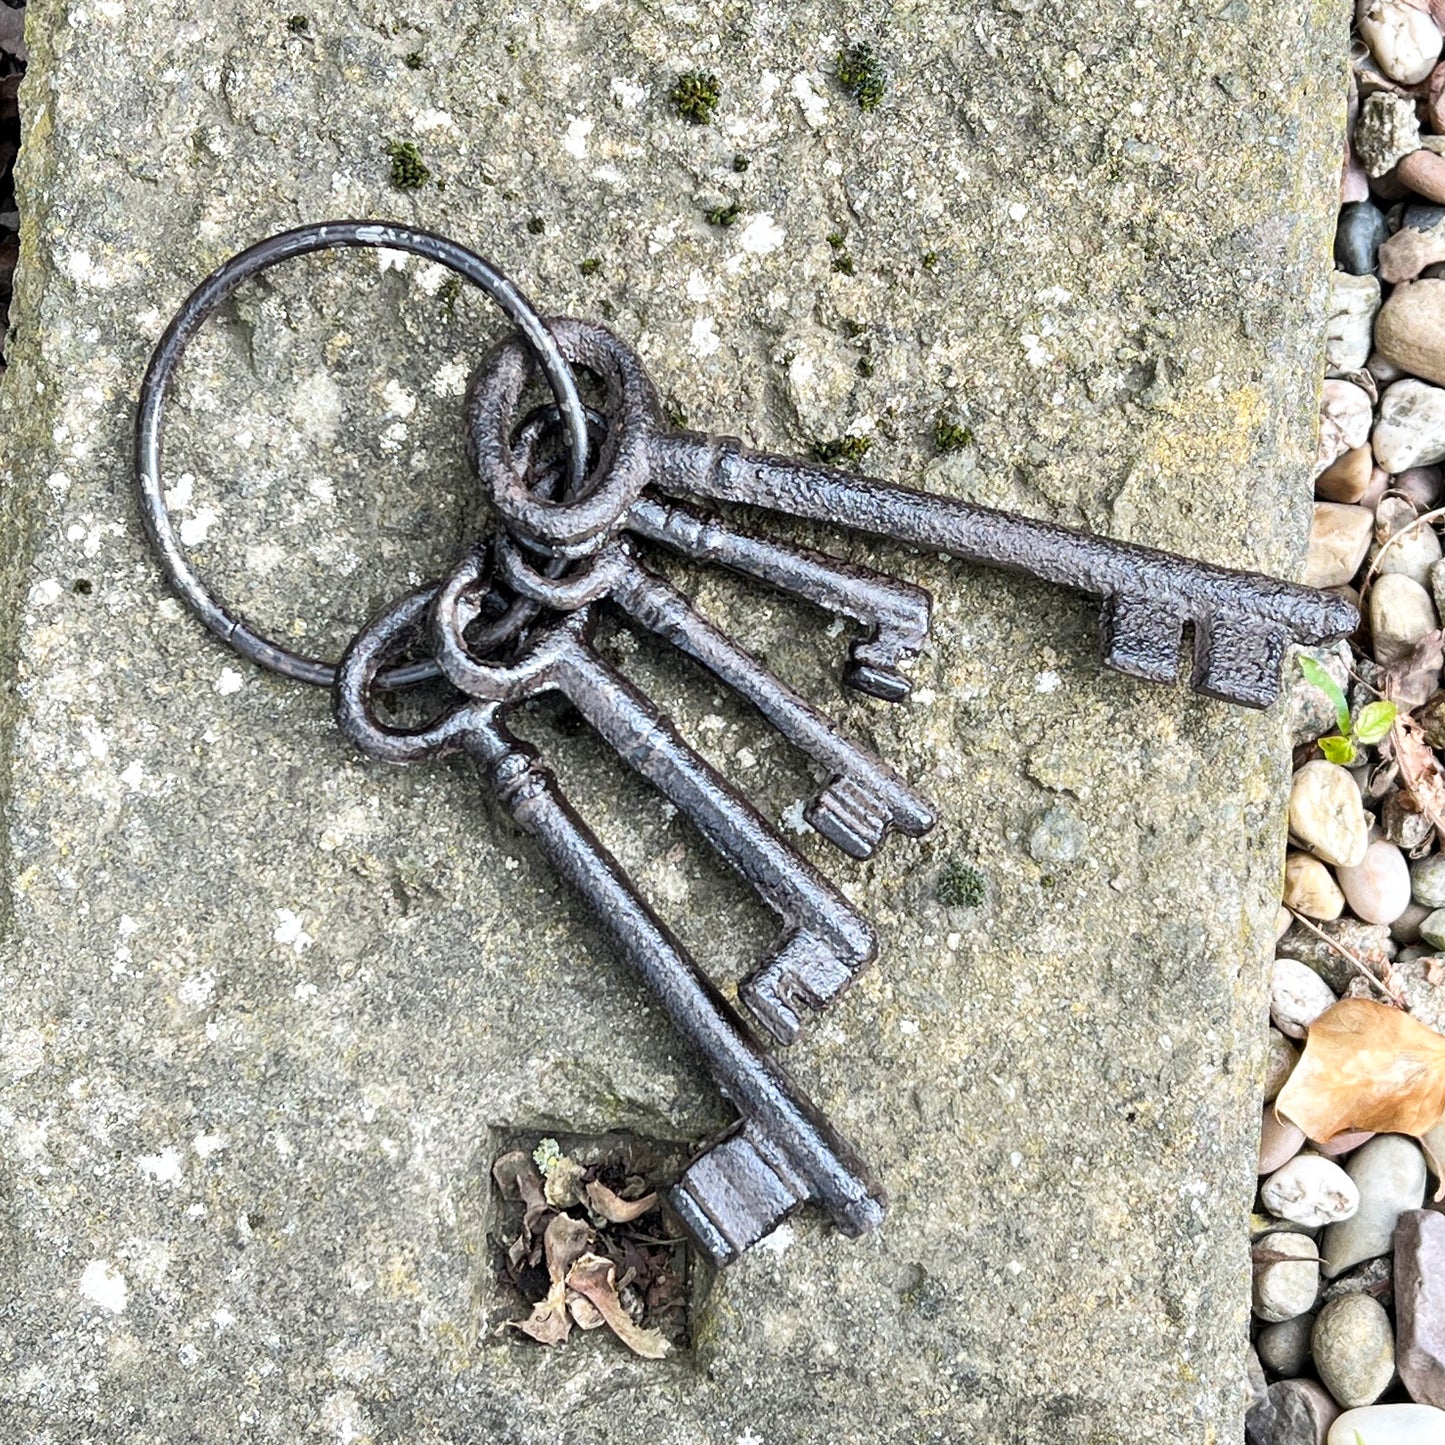 Large Bunch of Antique Style Jailer Keys